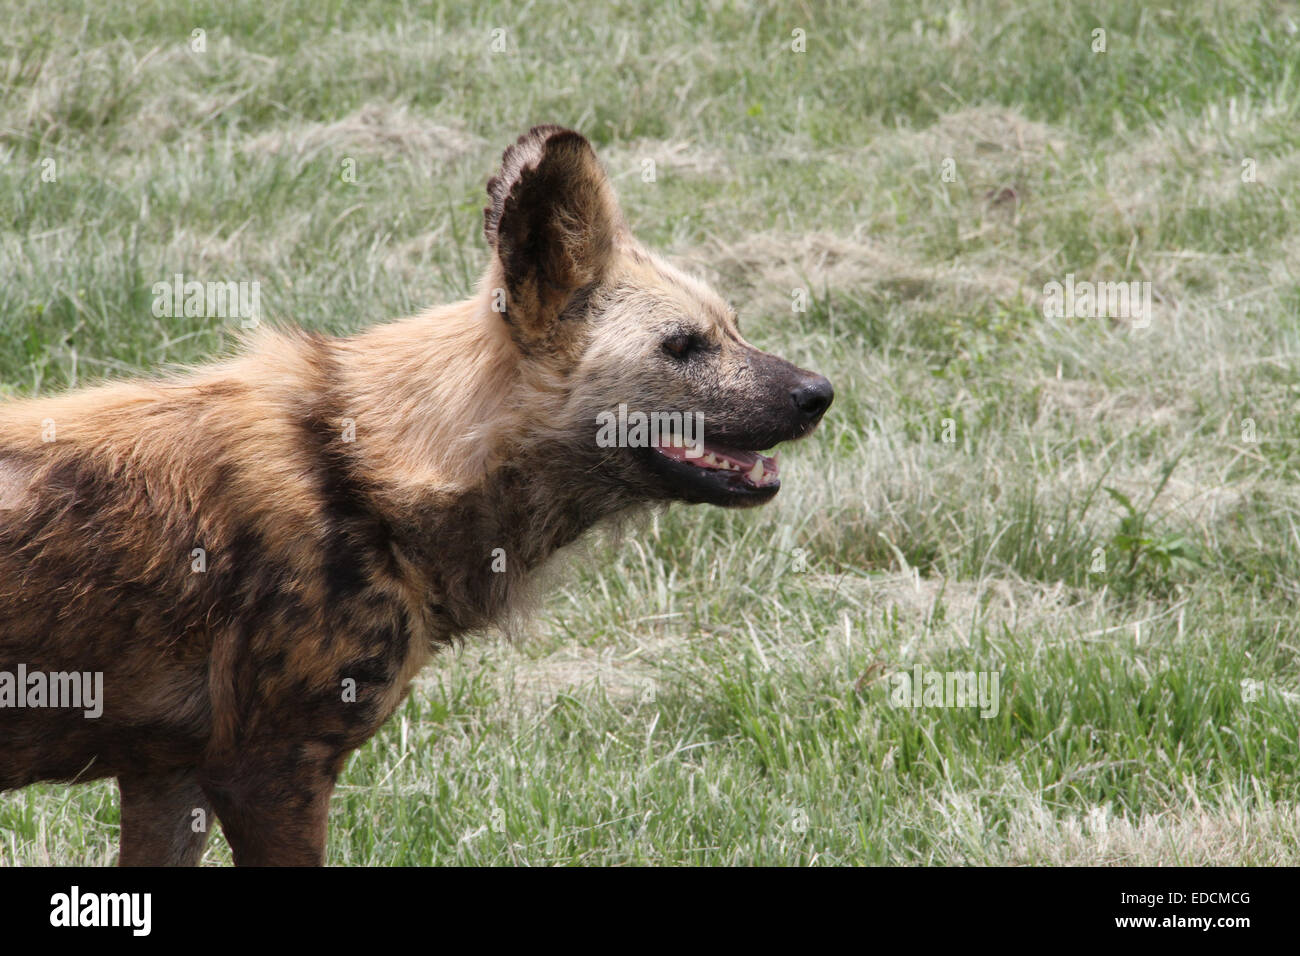 Wild Dog. Dog. African painted dog. Genus Lycaon. Endangered. Hypercarnivorous diet. African wild dog. 'wolf-like'. Stock Photo